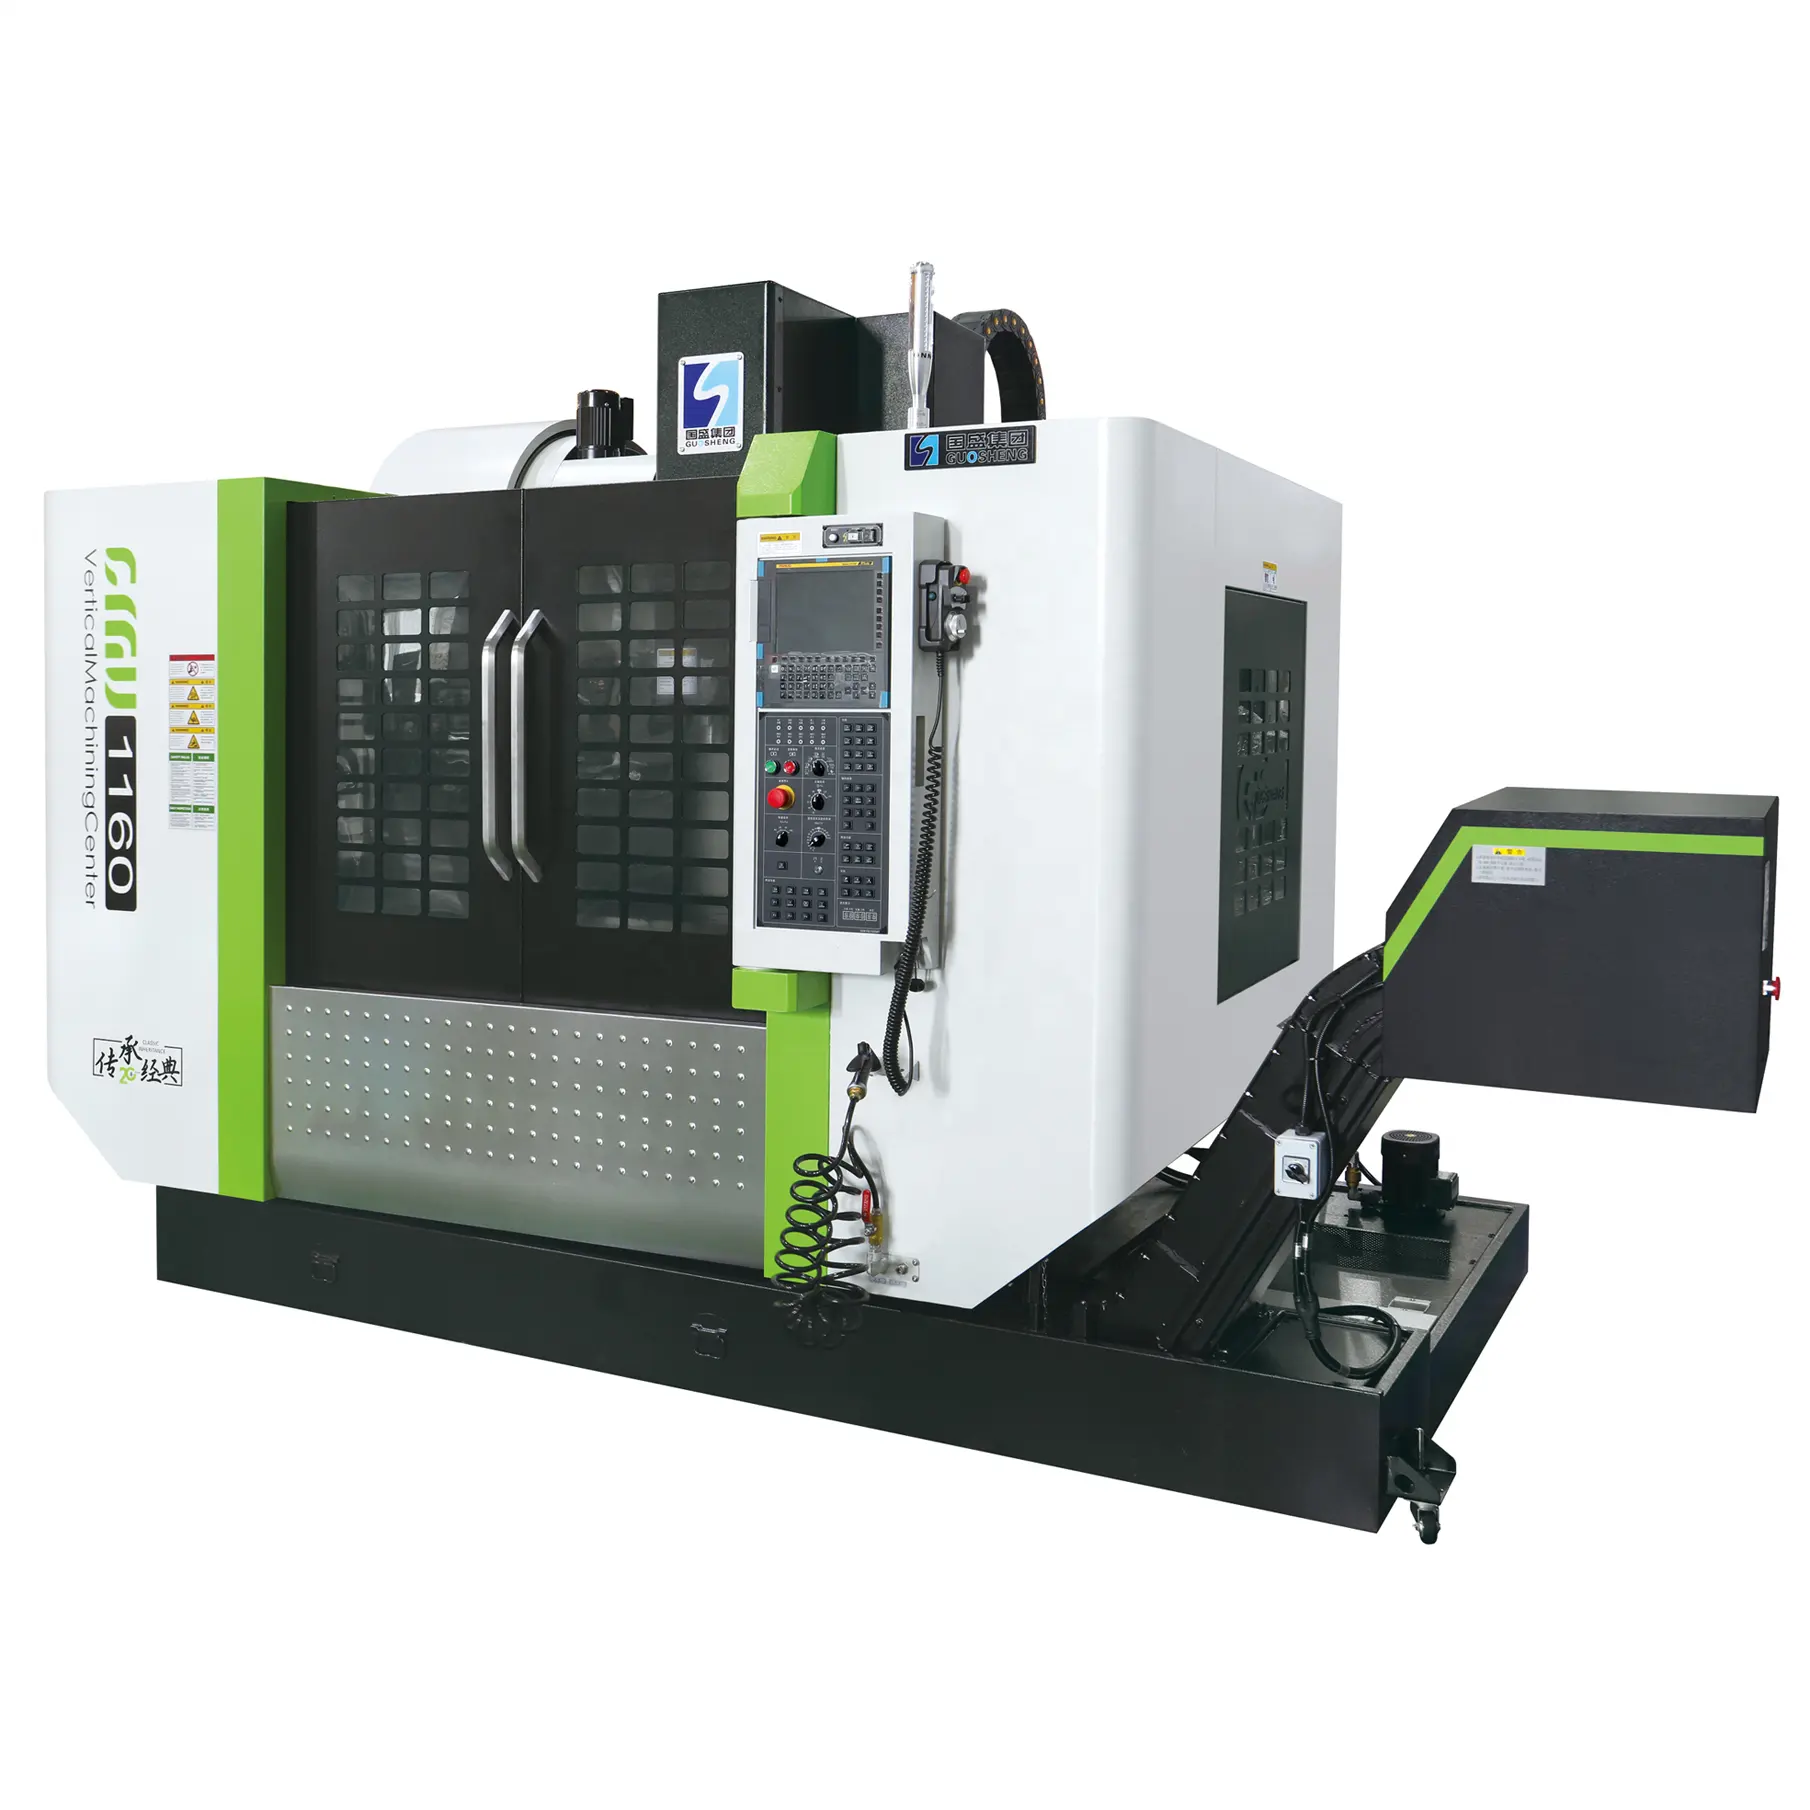 CMV1160 High efficiency vertical cnc milling machine manufacturing provider